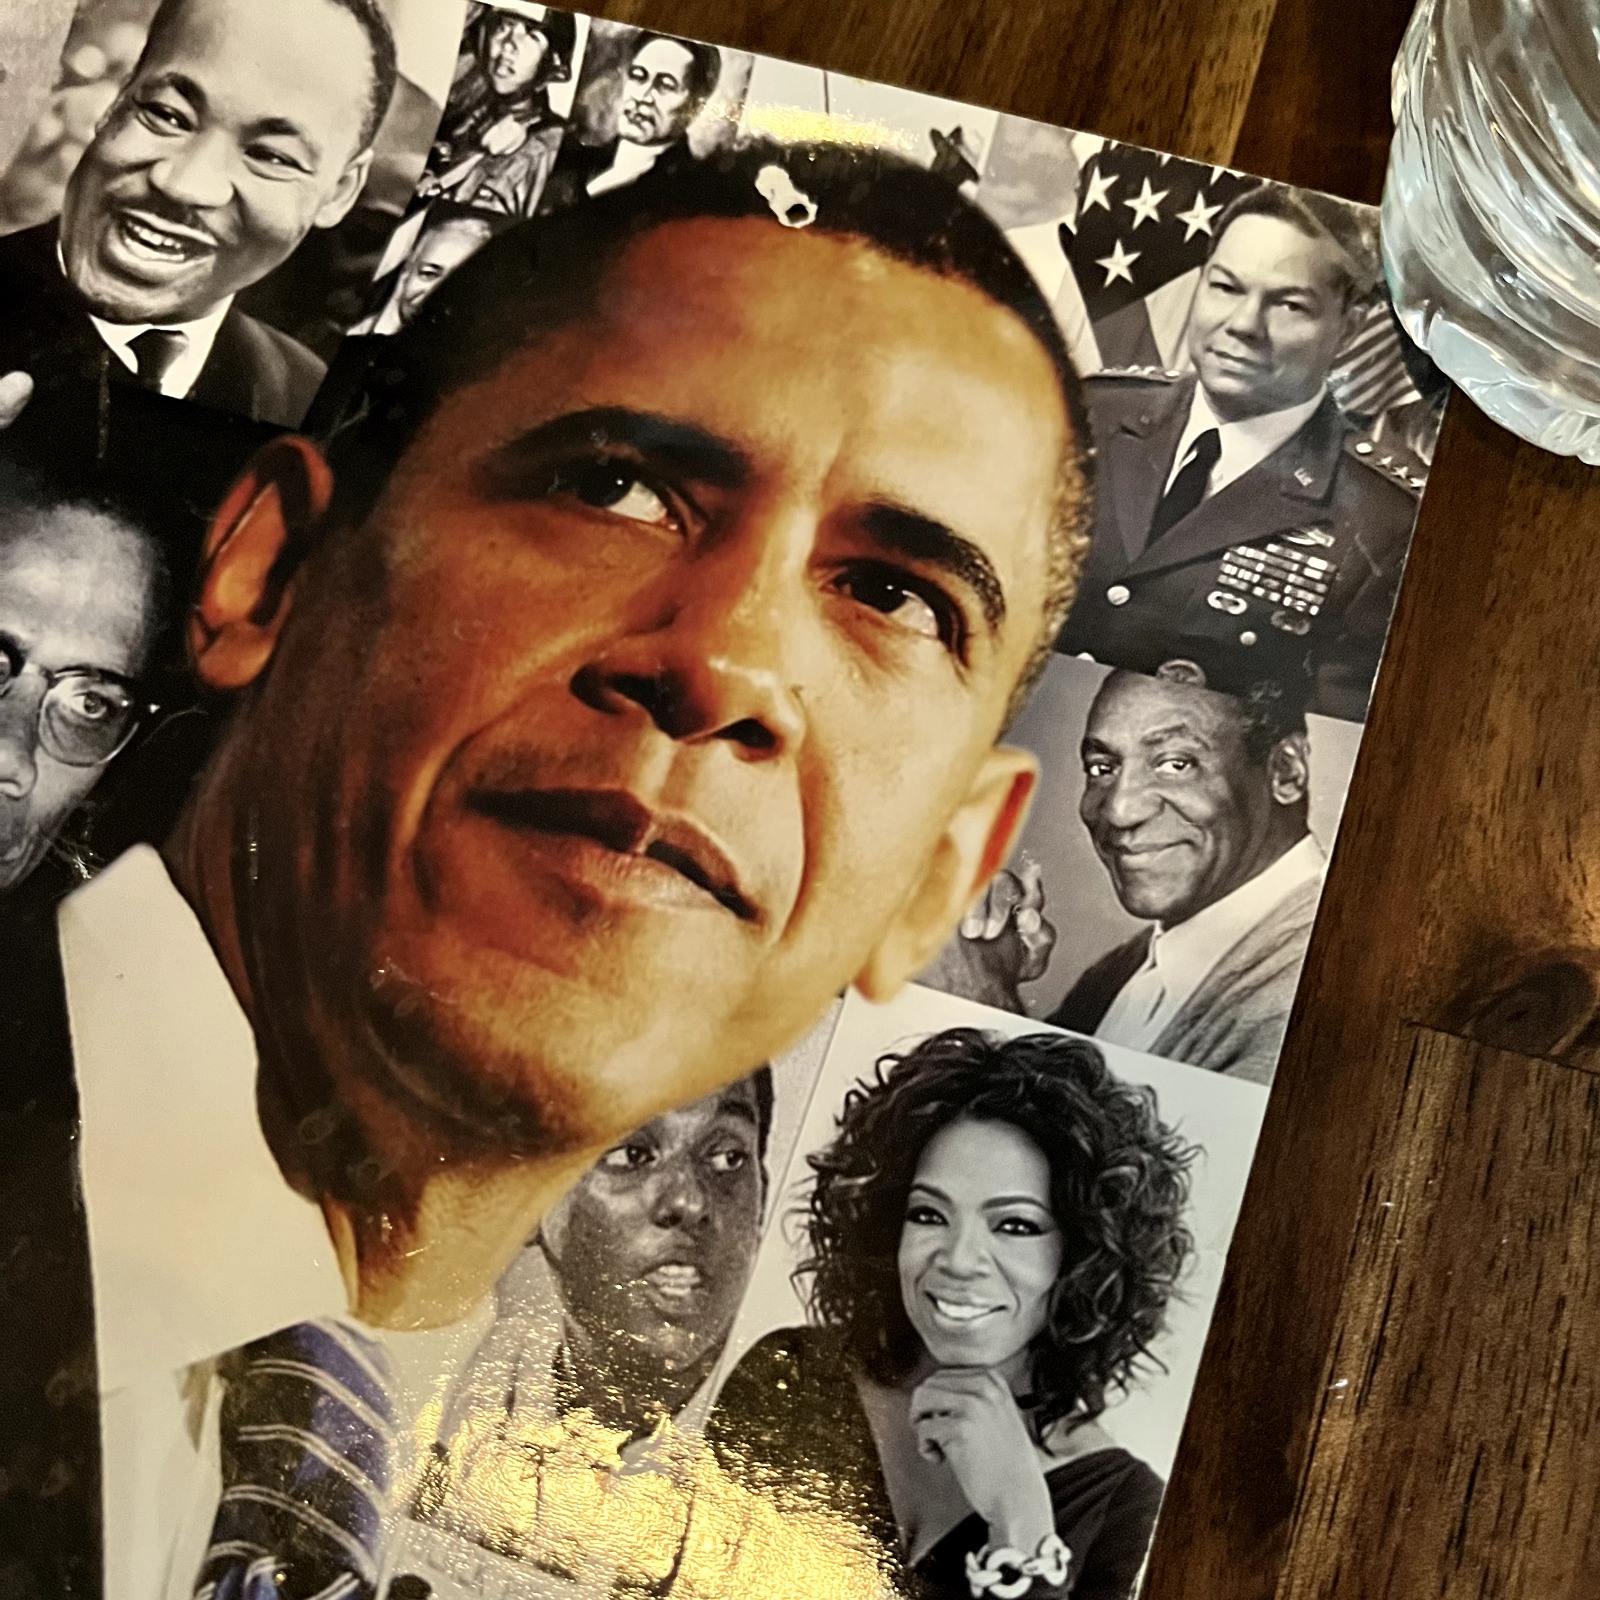 Obama Calendar 2009 Poster MLK Oprah Famous African Americans HOPE CHANGE 11x17